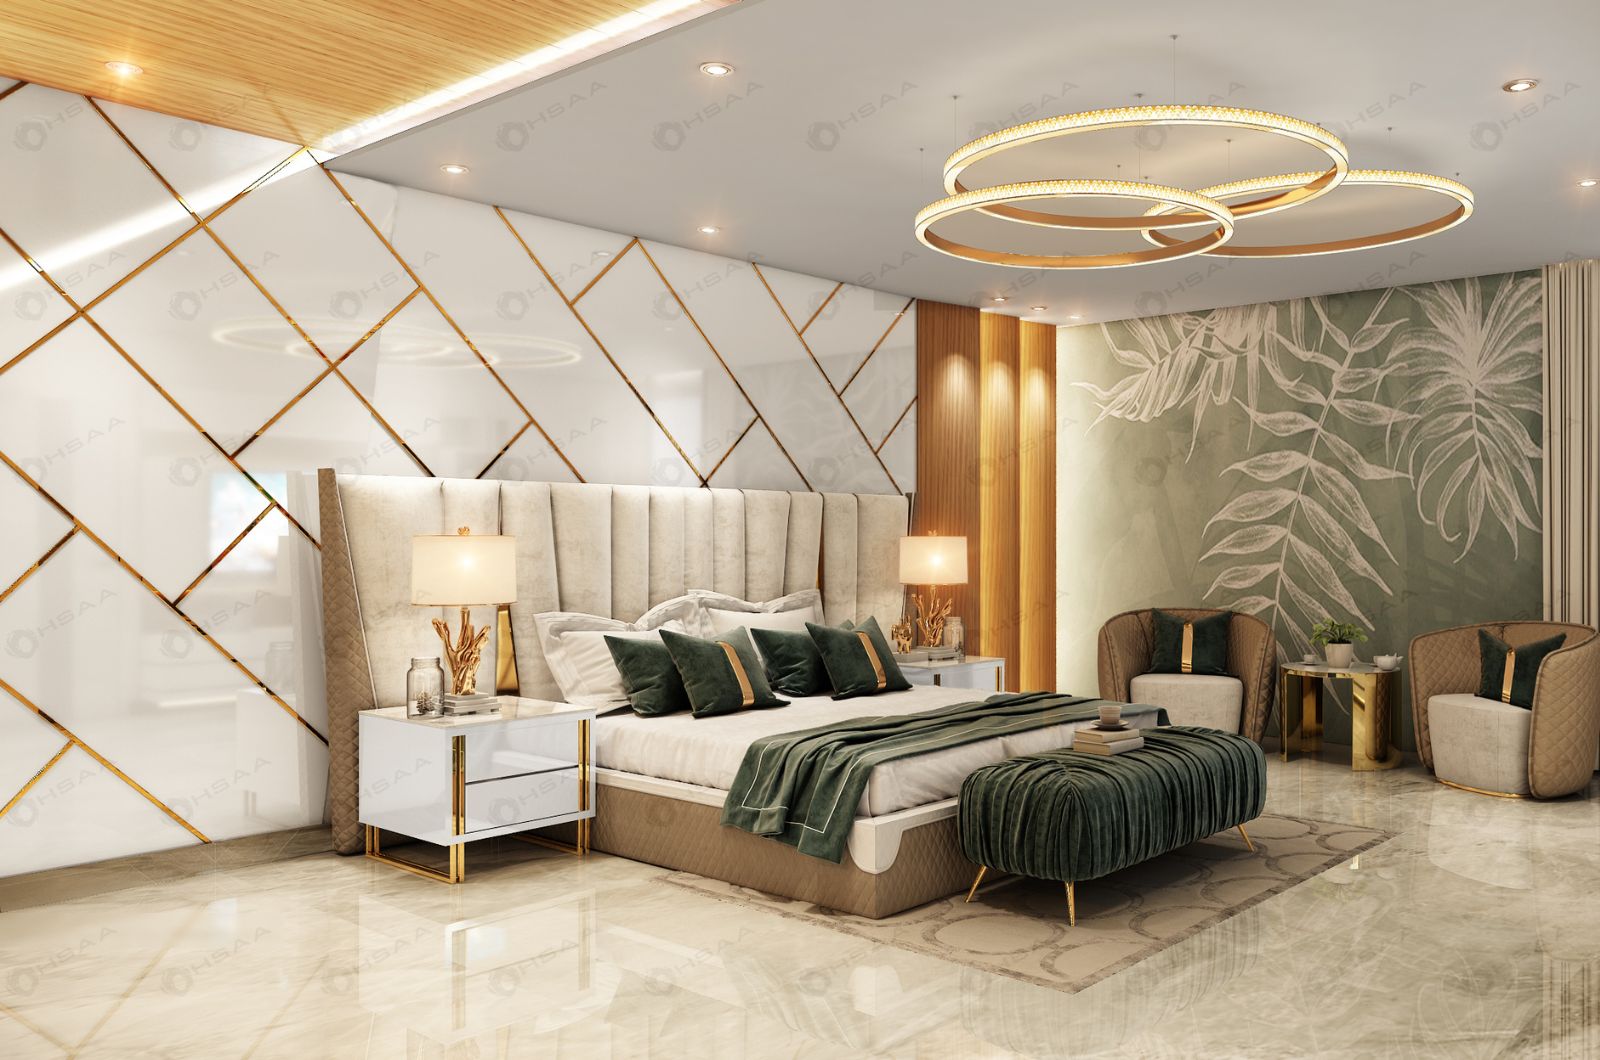 Luxury Bedroom Interior Design: 25 Inspiring Ideas - Delhi Interior Designing